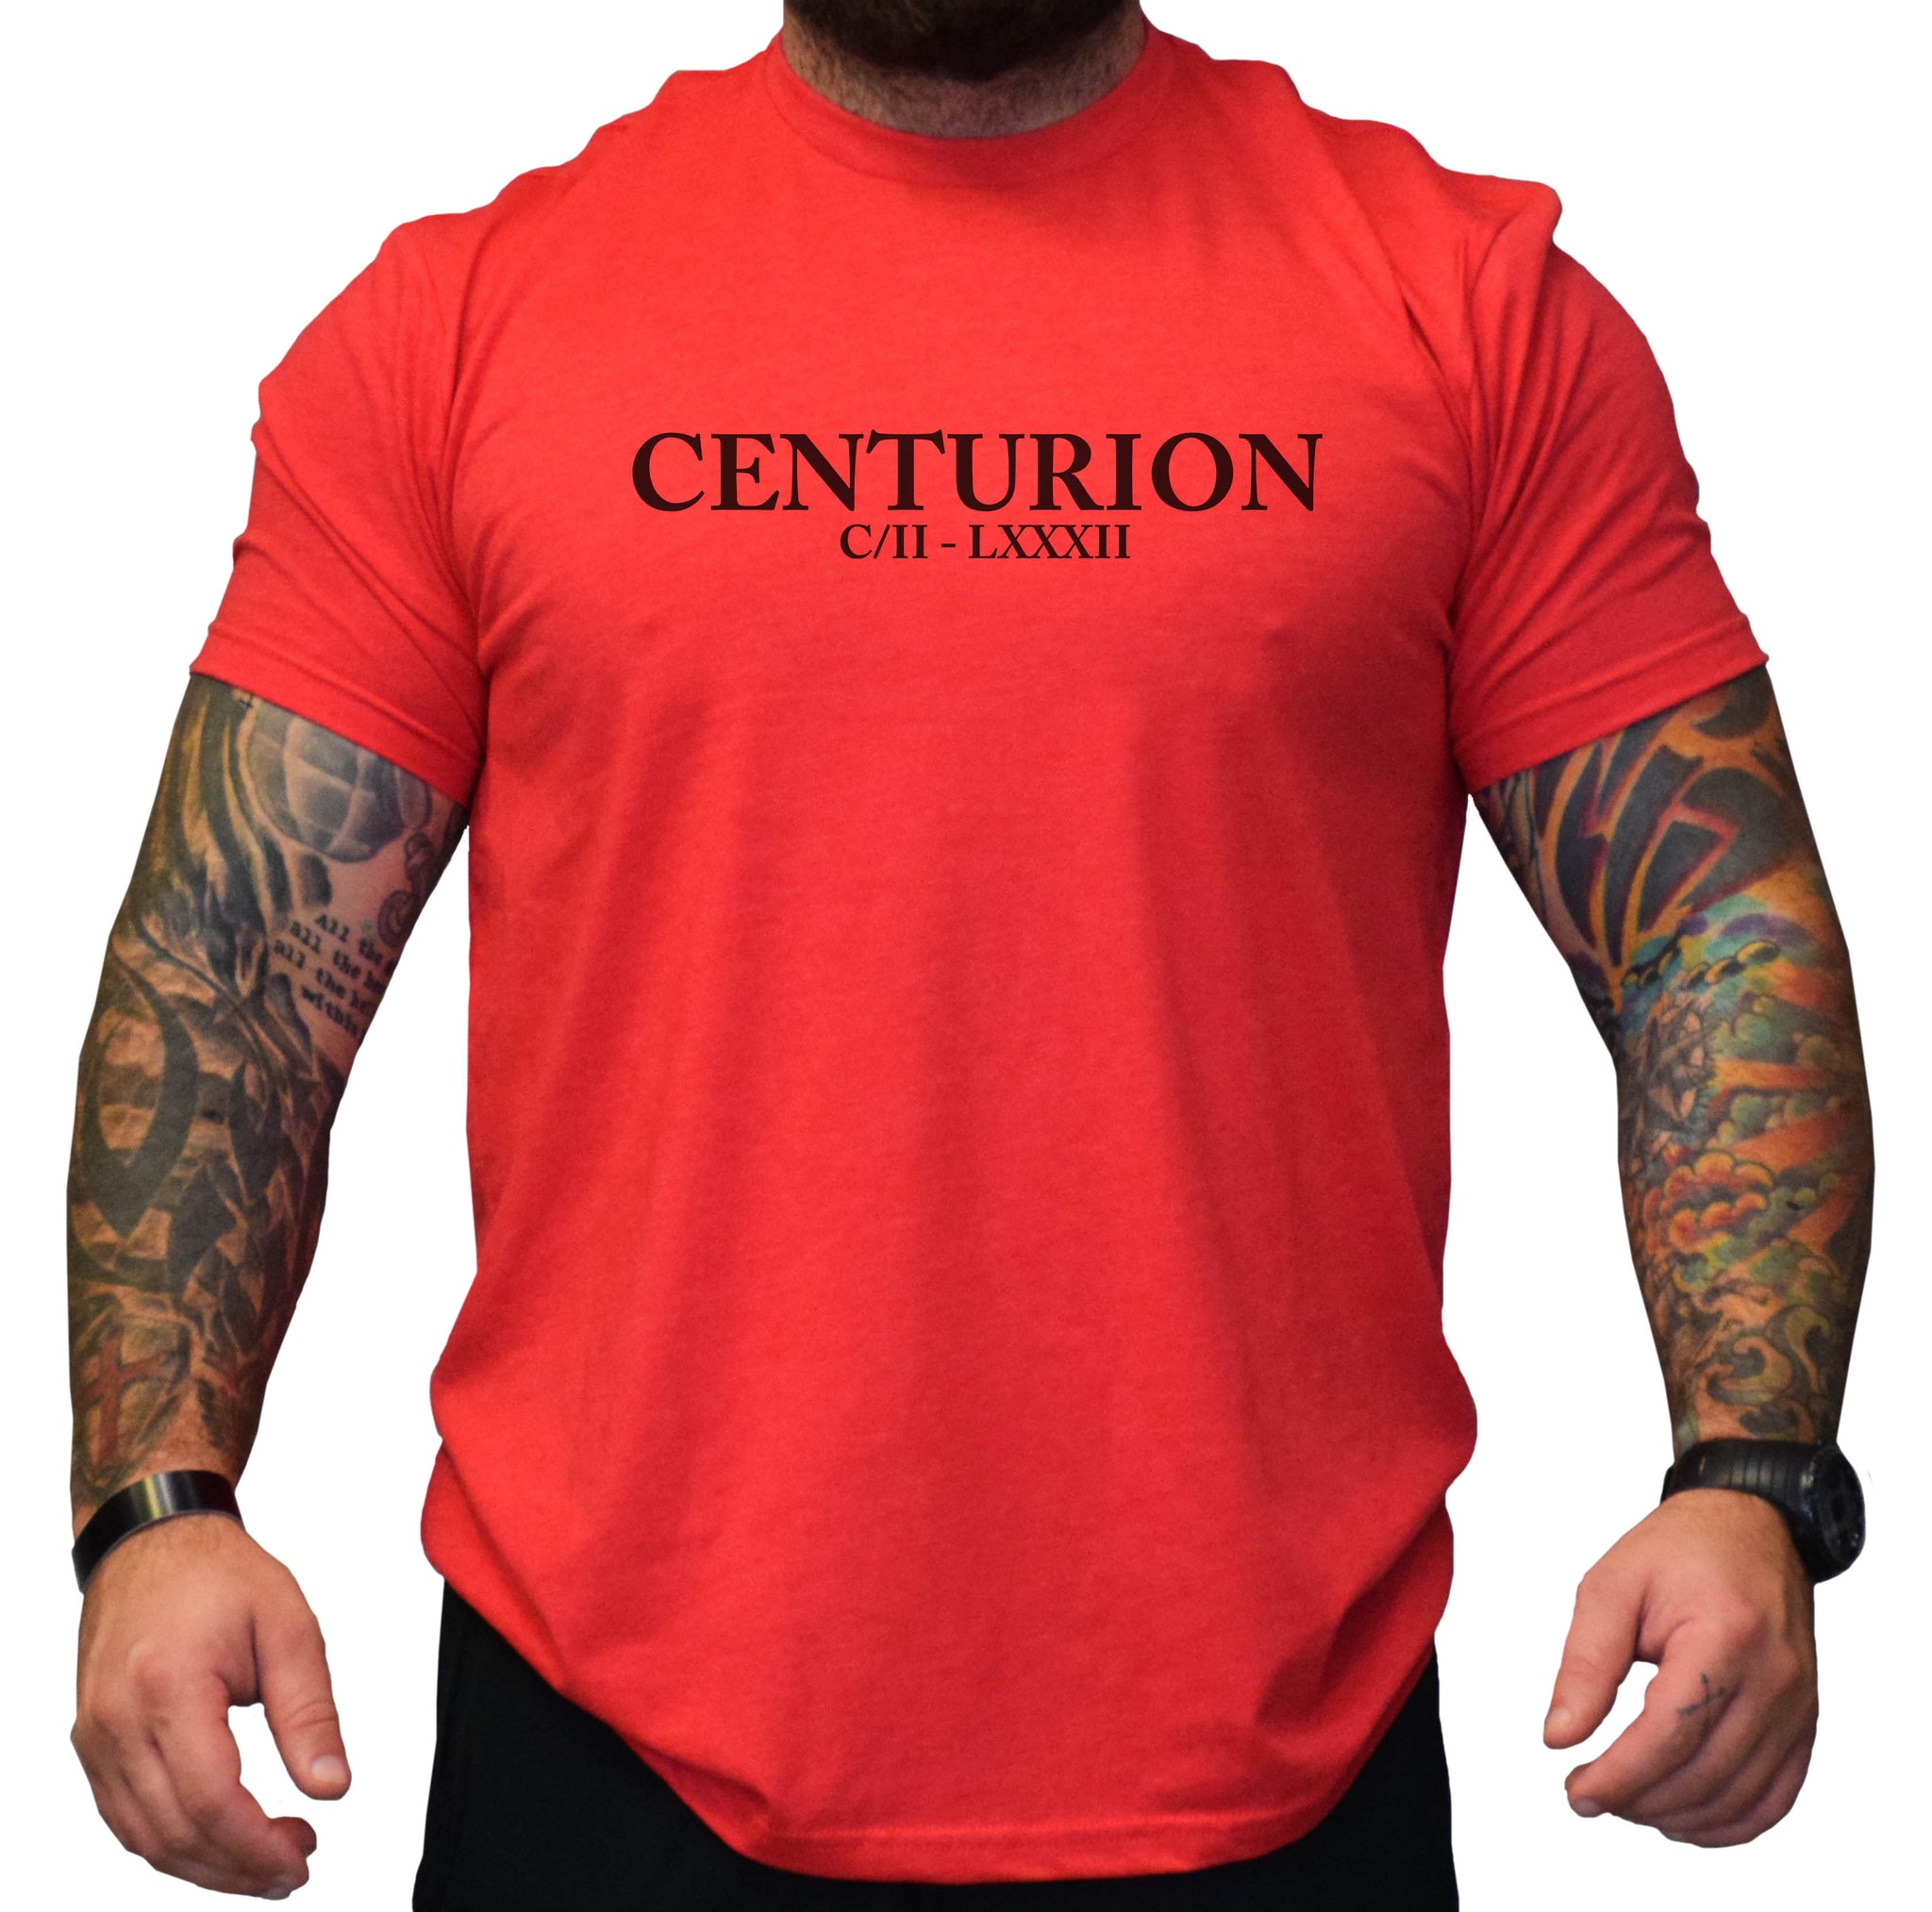 Centurion Battery Physical Fitness Shirt